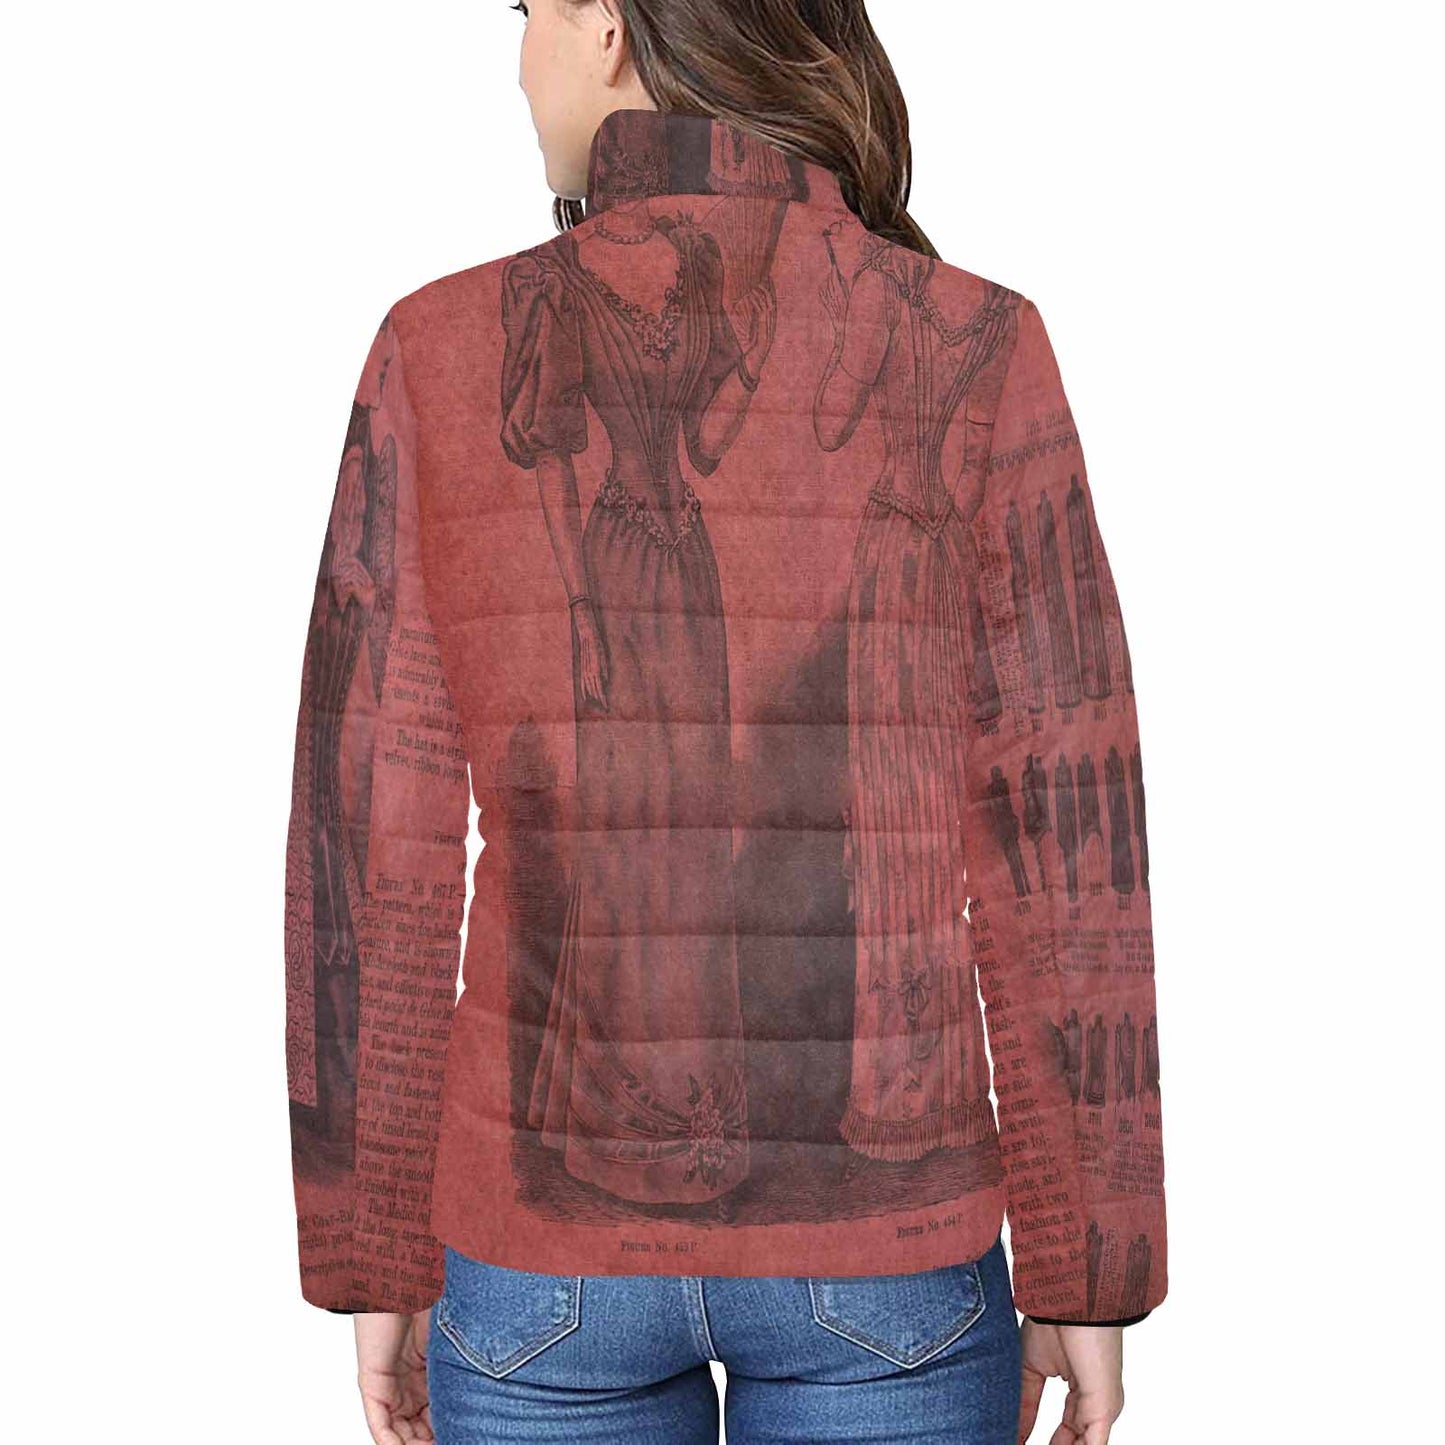 Antique general print quilted jacket, design 37